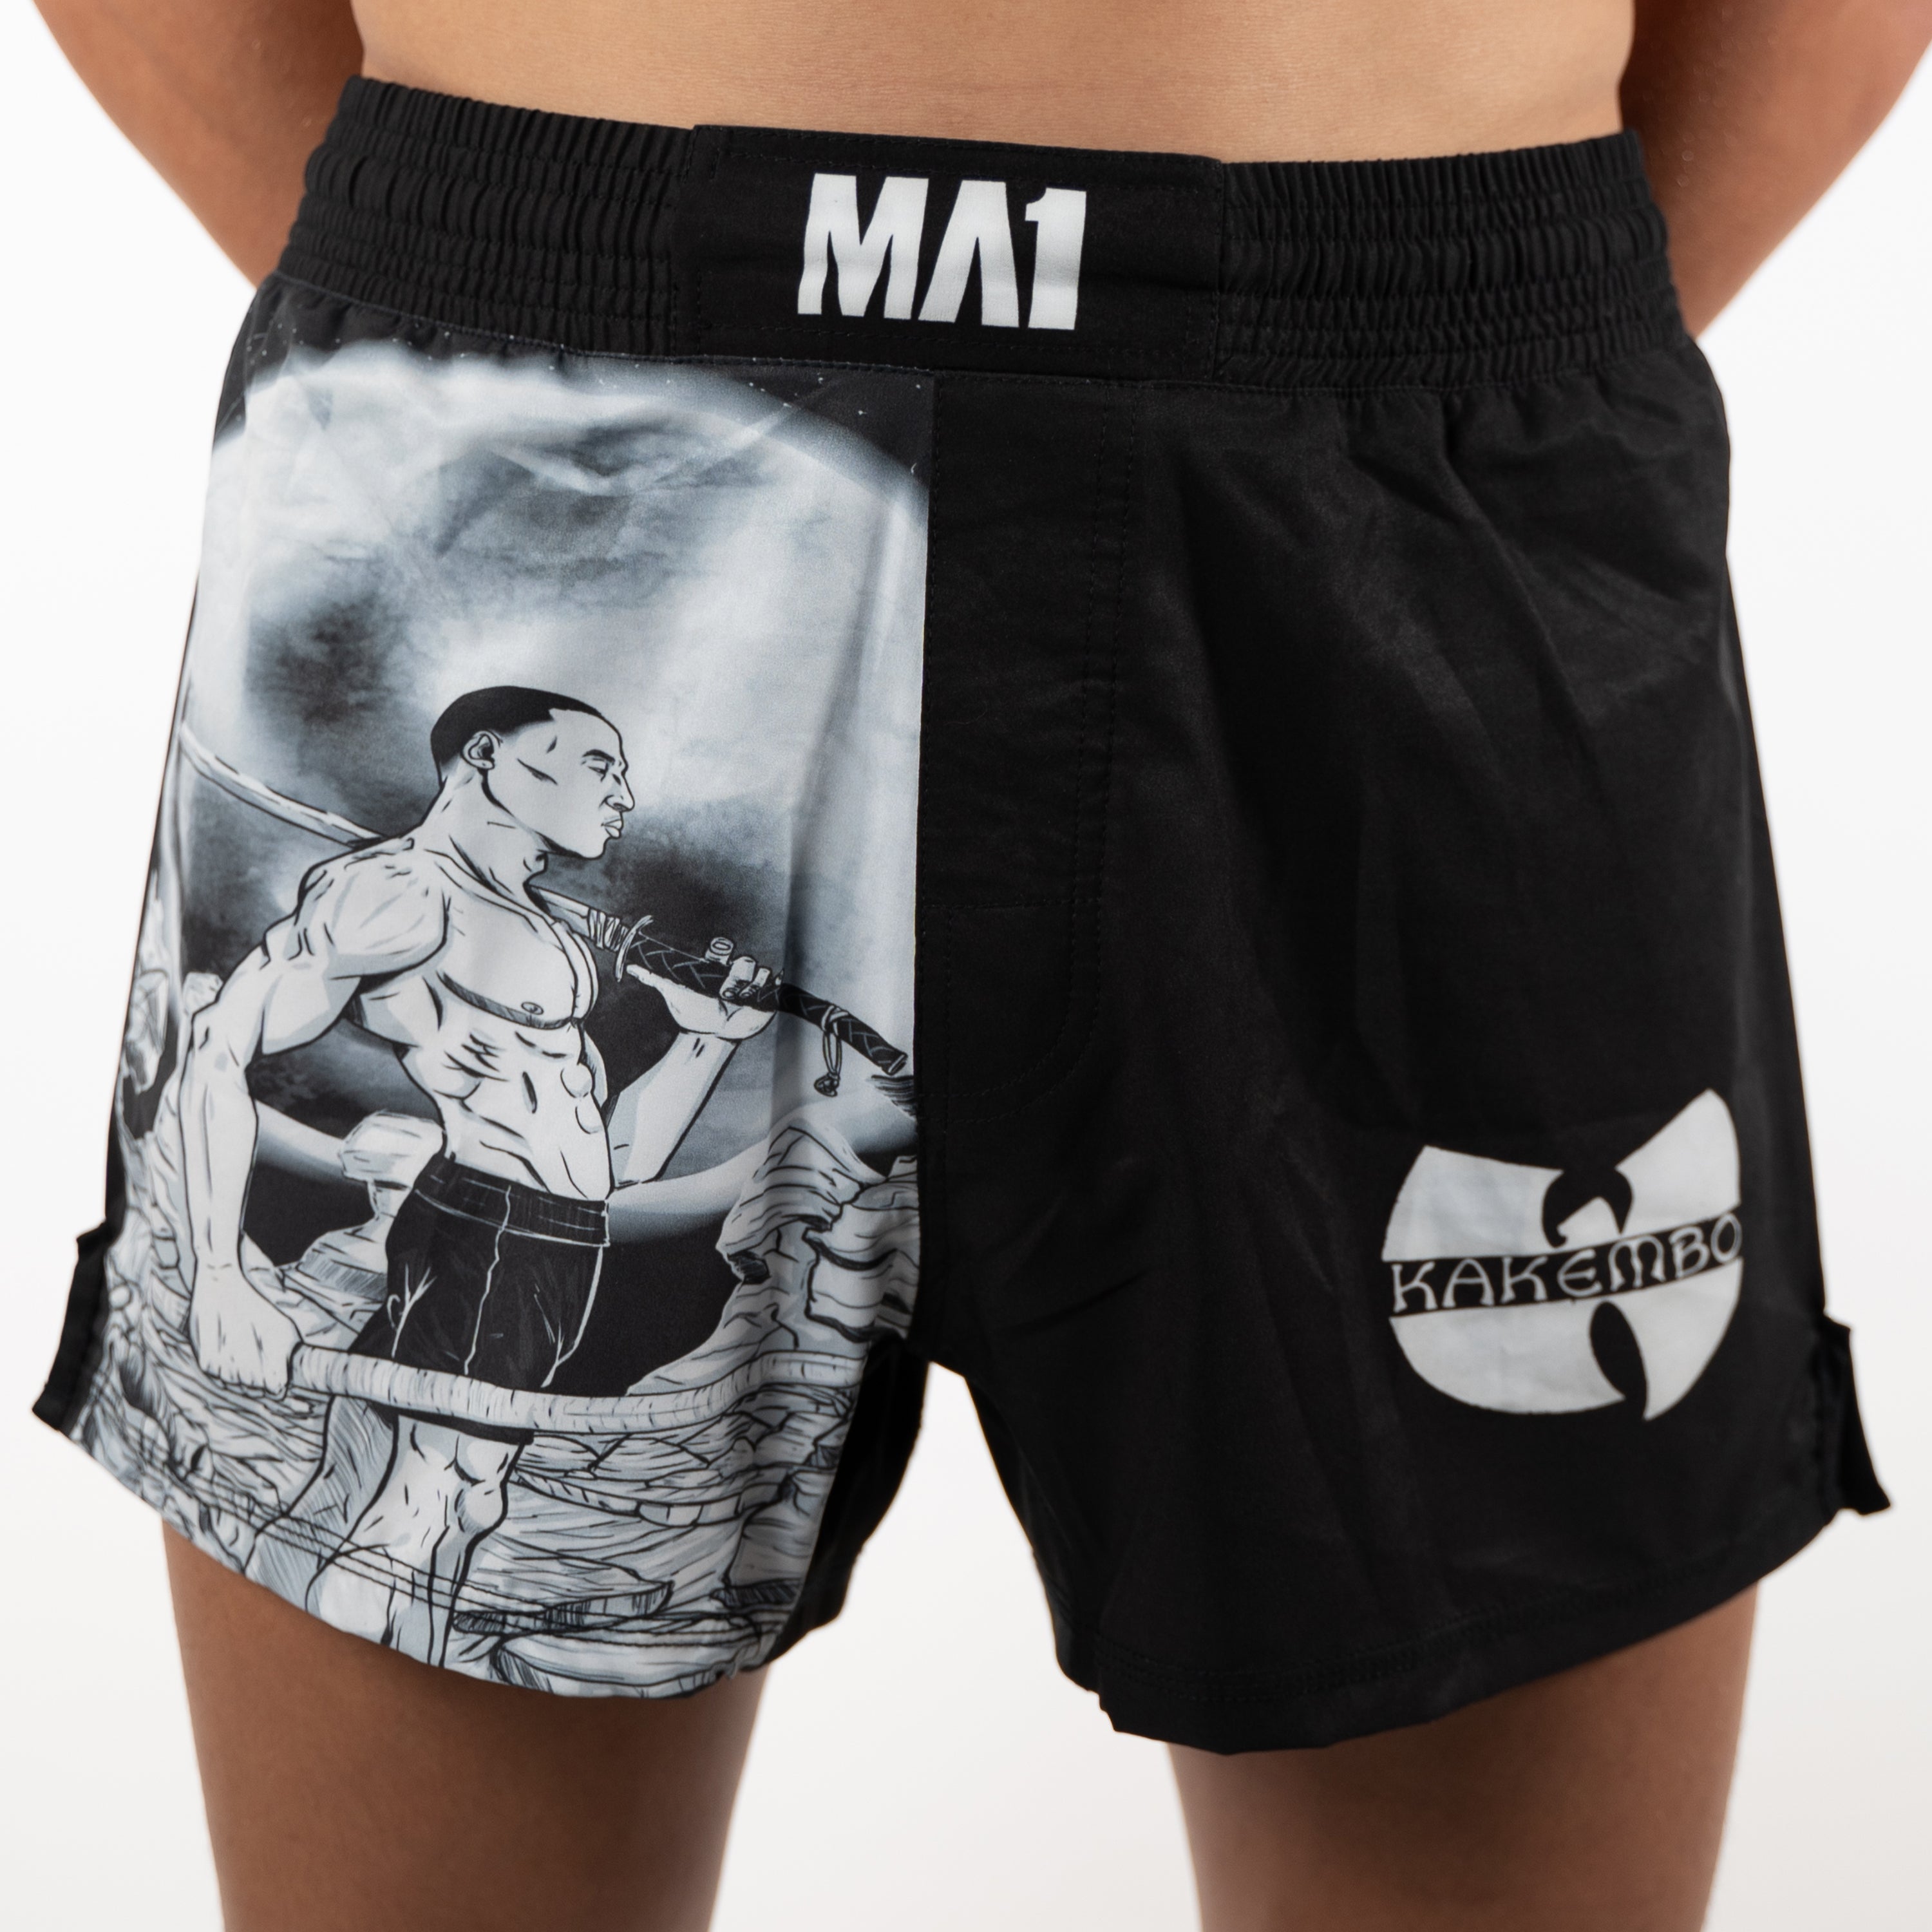 MA1 Sem Kakembo High Cut MMA Shorts